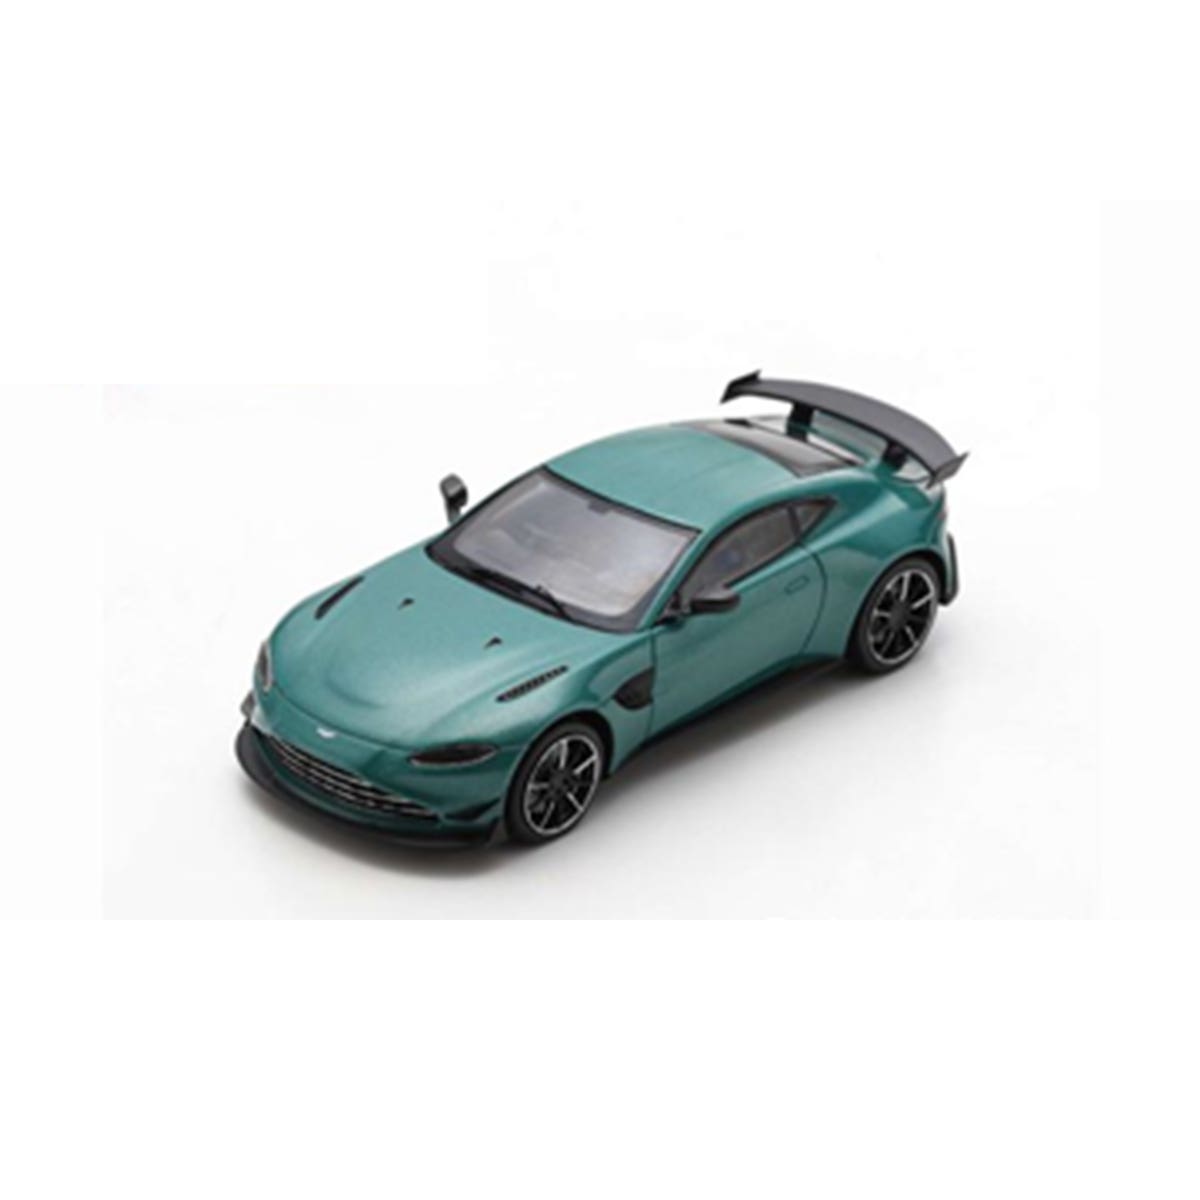 Aston Martin Vantage F1 Green - 1:43 Scale Resin Model Car